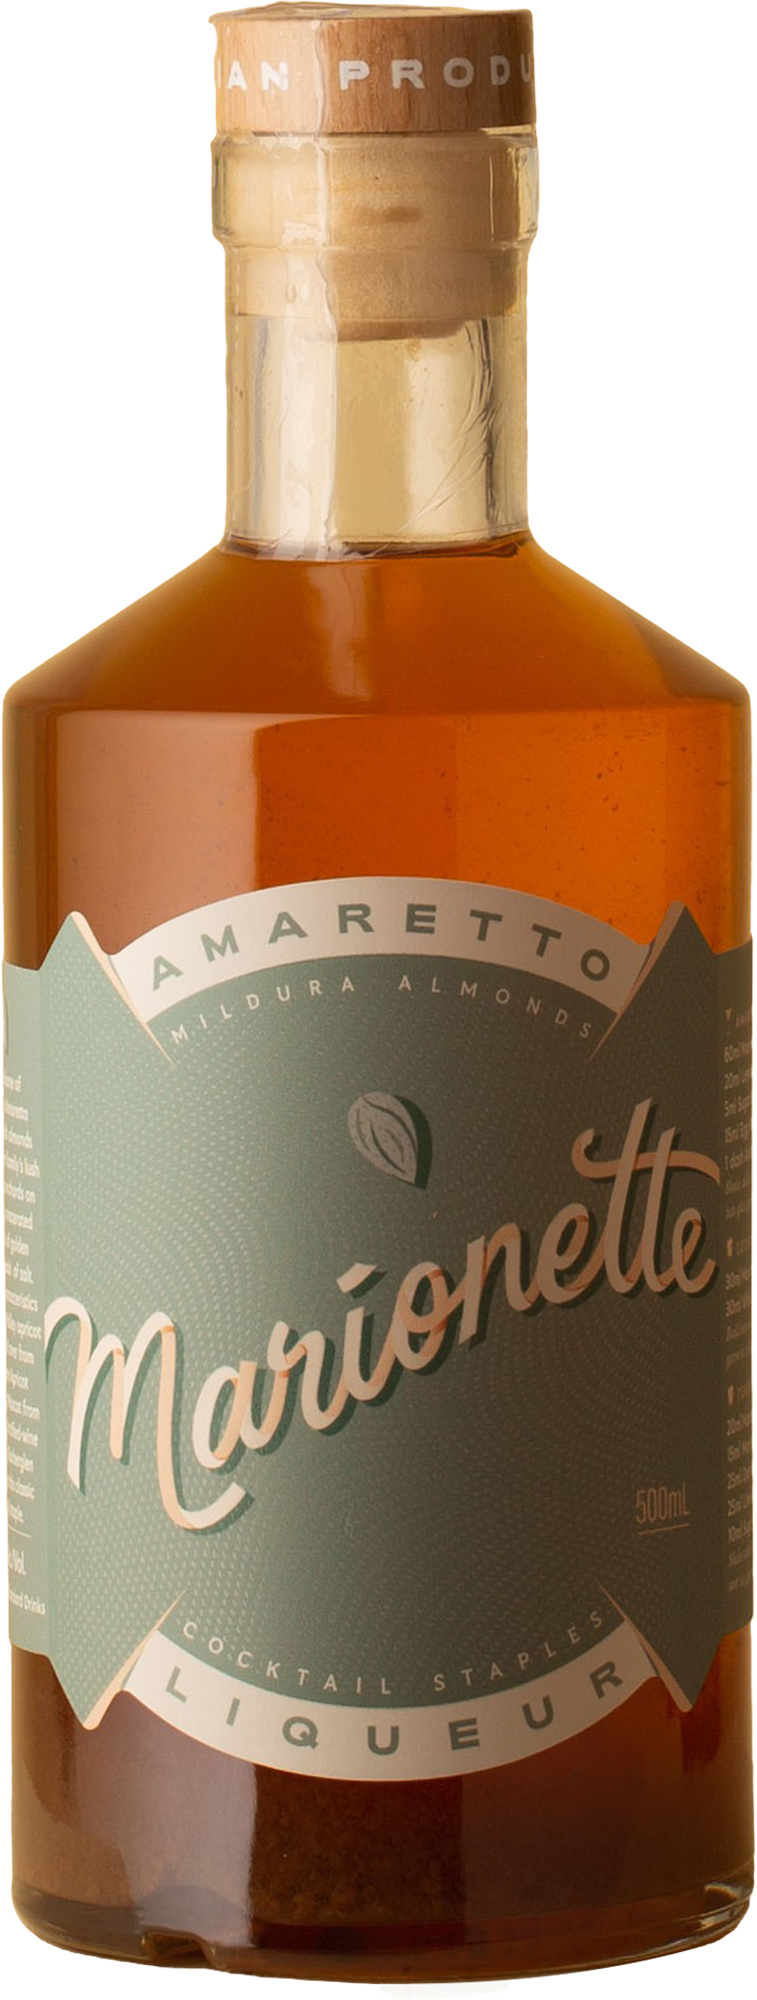 Marionette - Amaretto Liqueur 500mL Not Wine